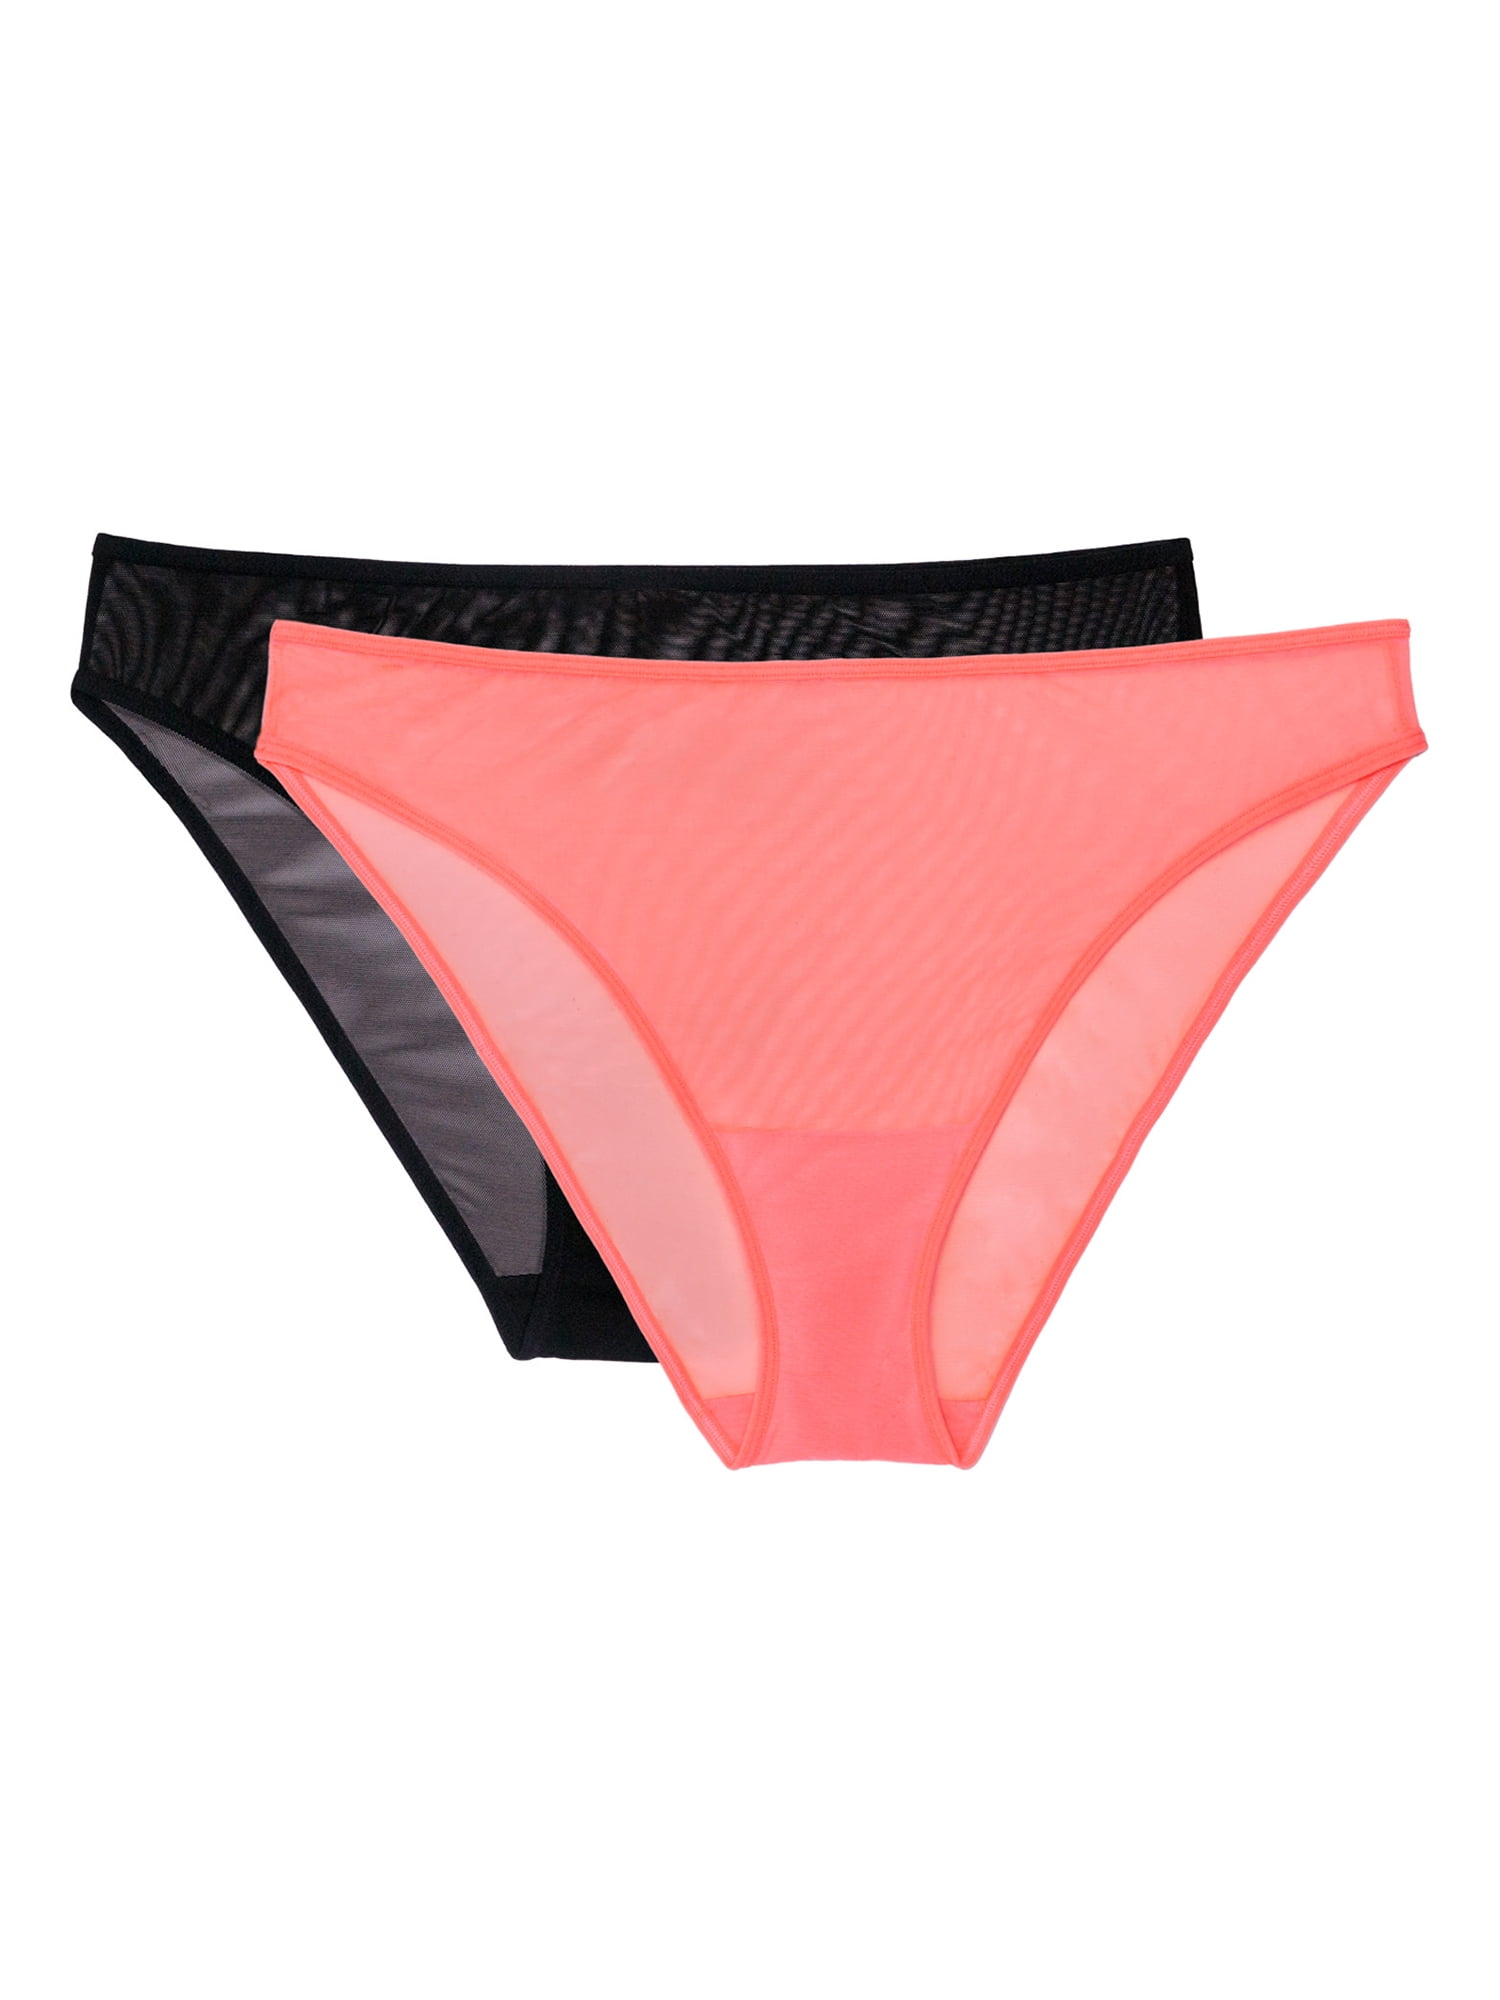 Smart and Sexy Women's Mesh String Bikini Panty 6 Pack Black Hue/Bark S